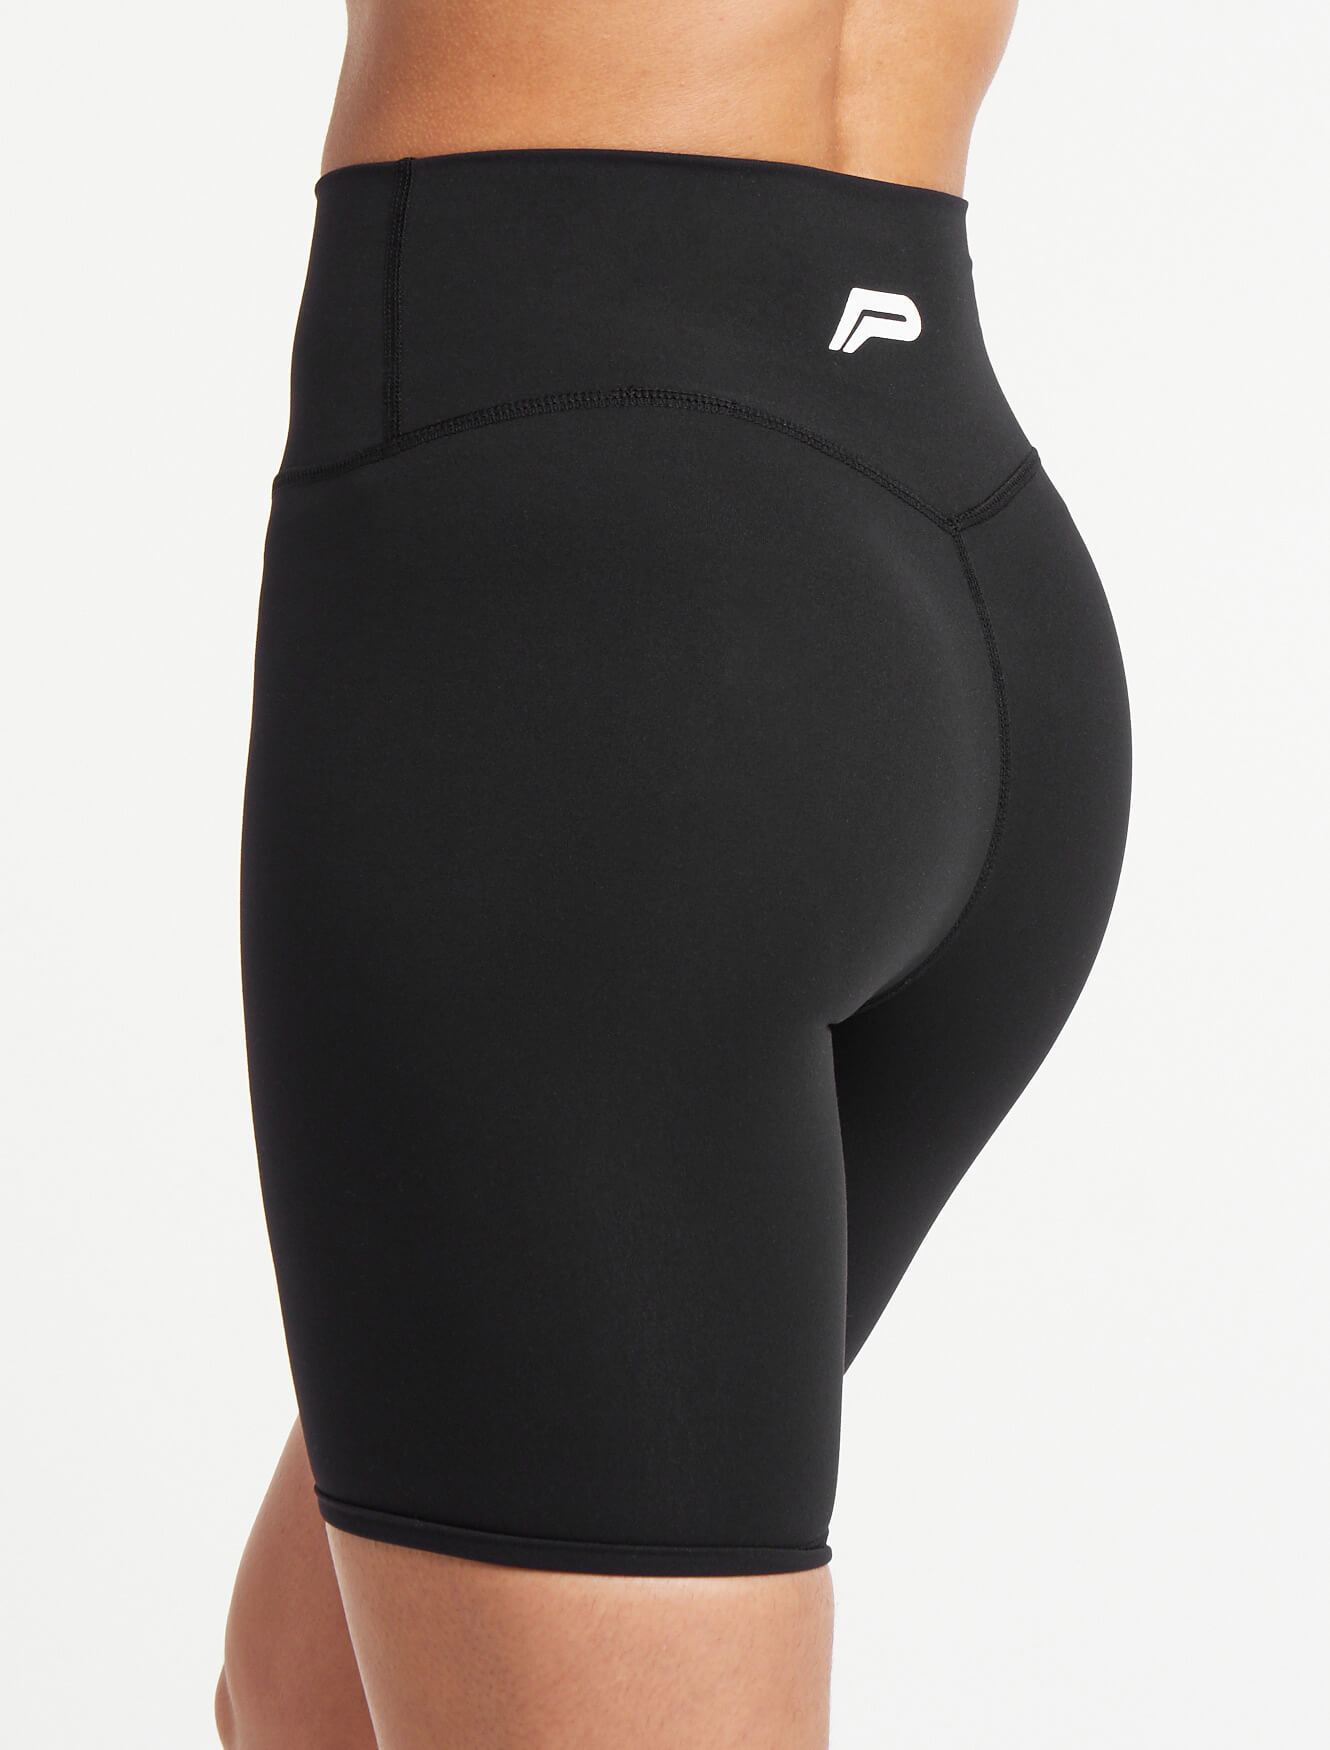 Pace Biker Shorts / Black Pursue Fitness 2